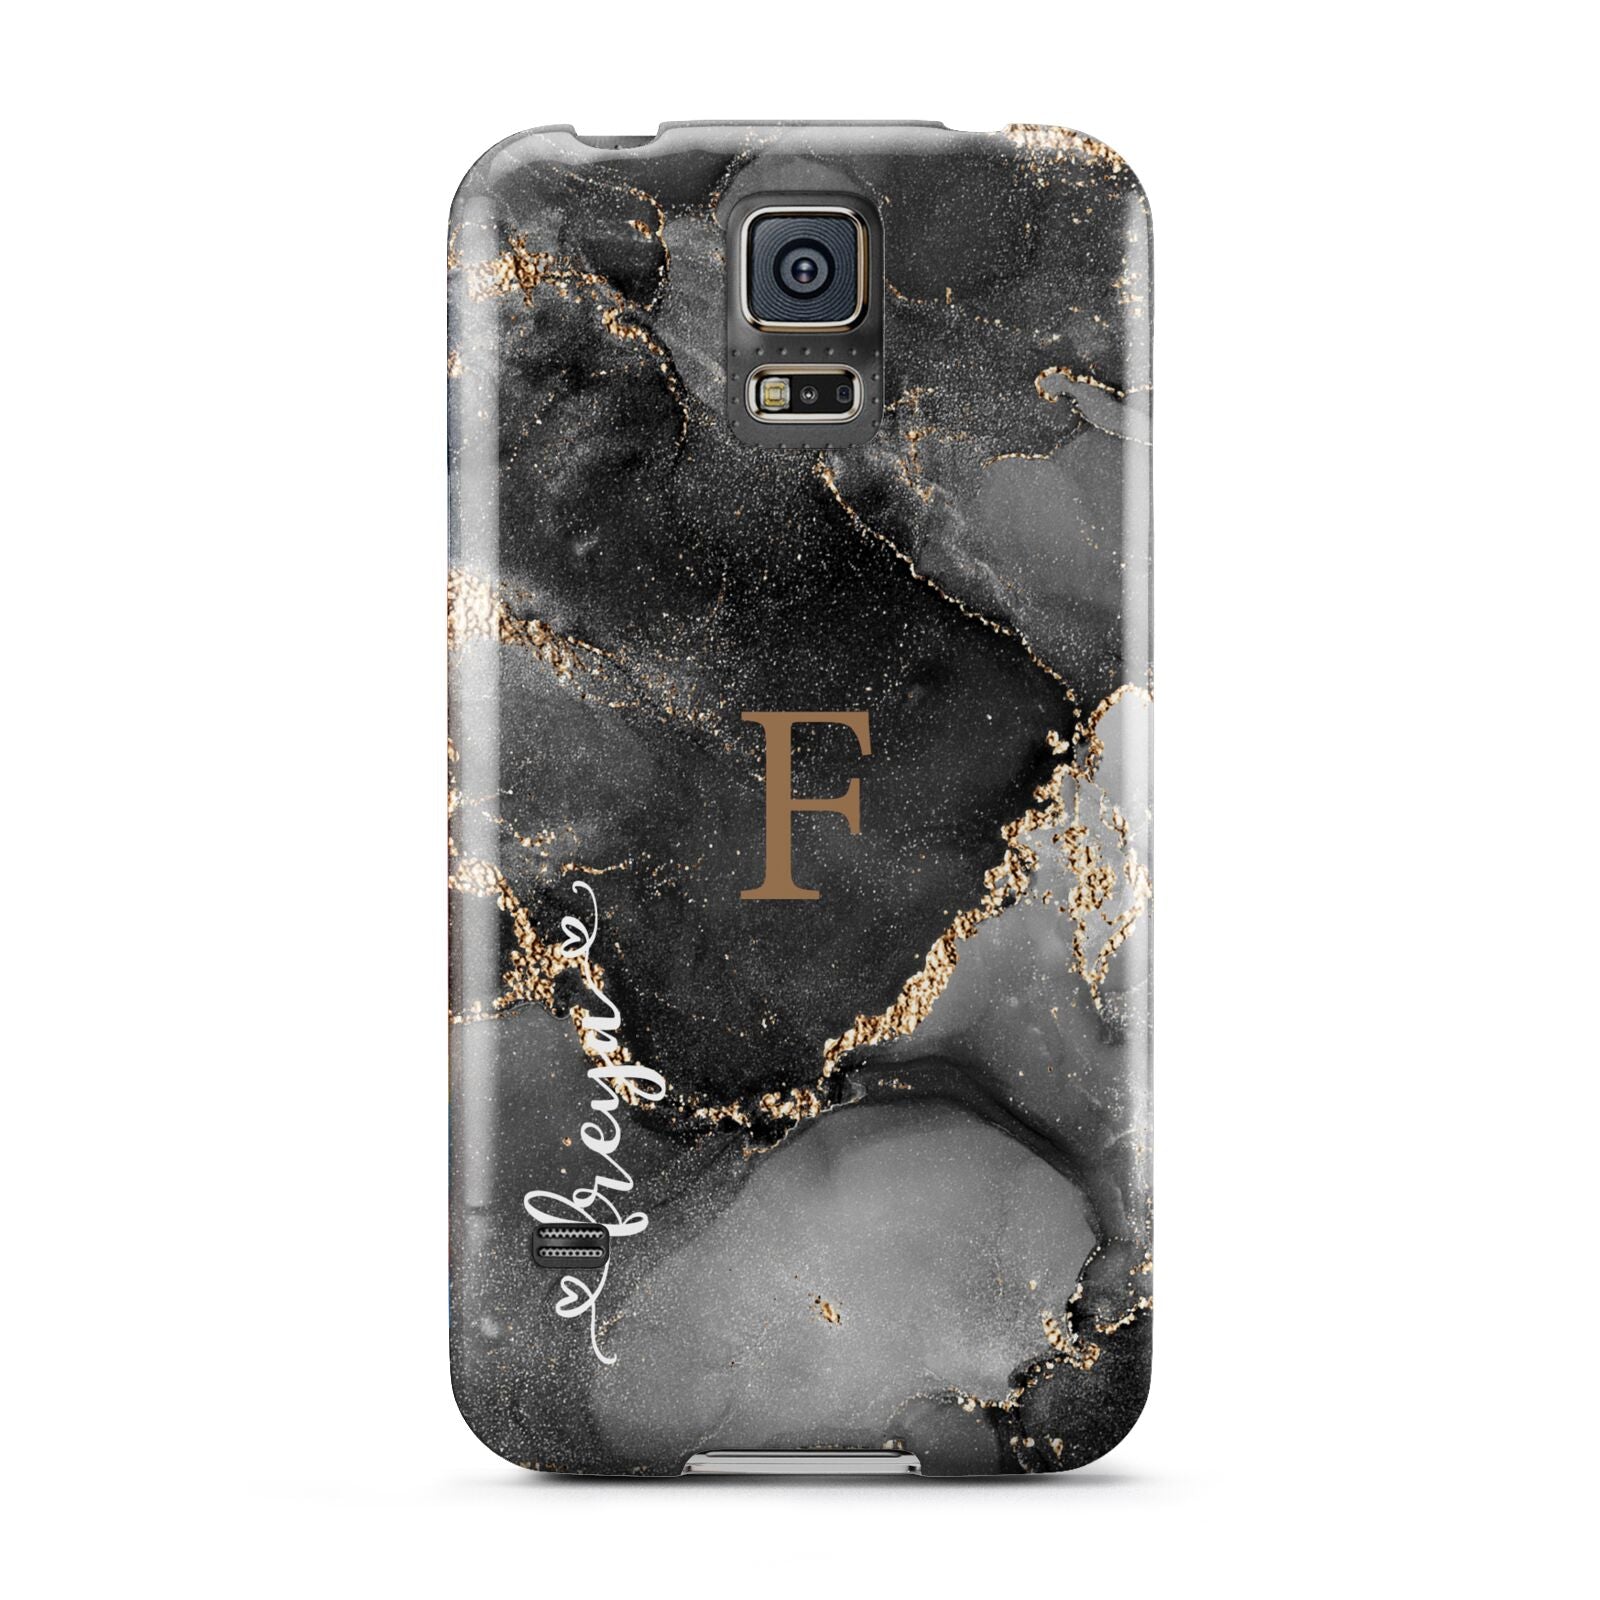 Black Marble Samsung Galaxy S5 Case